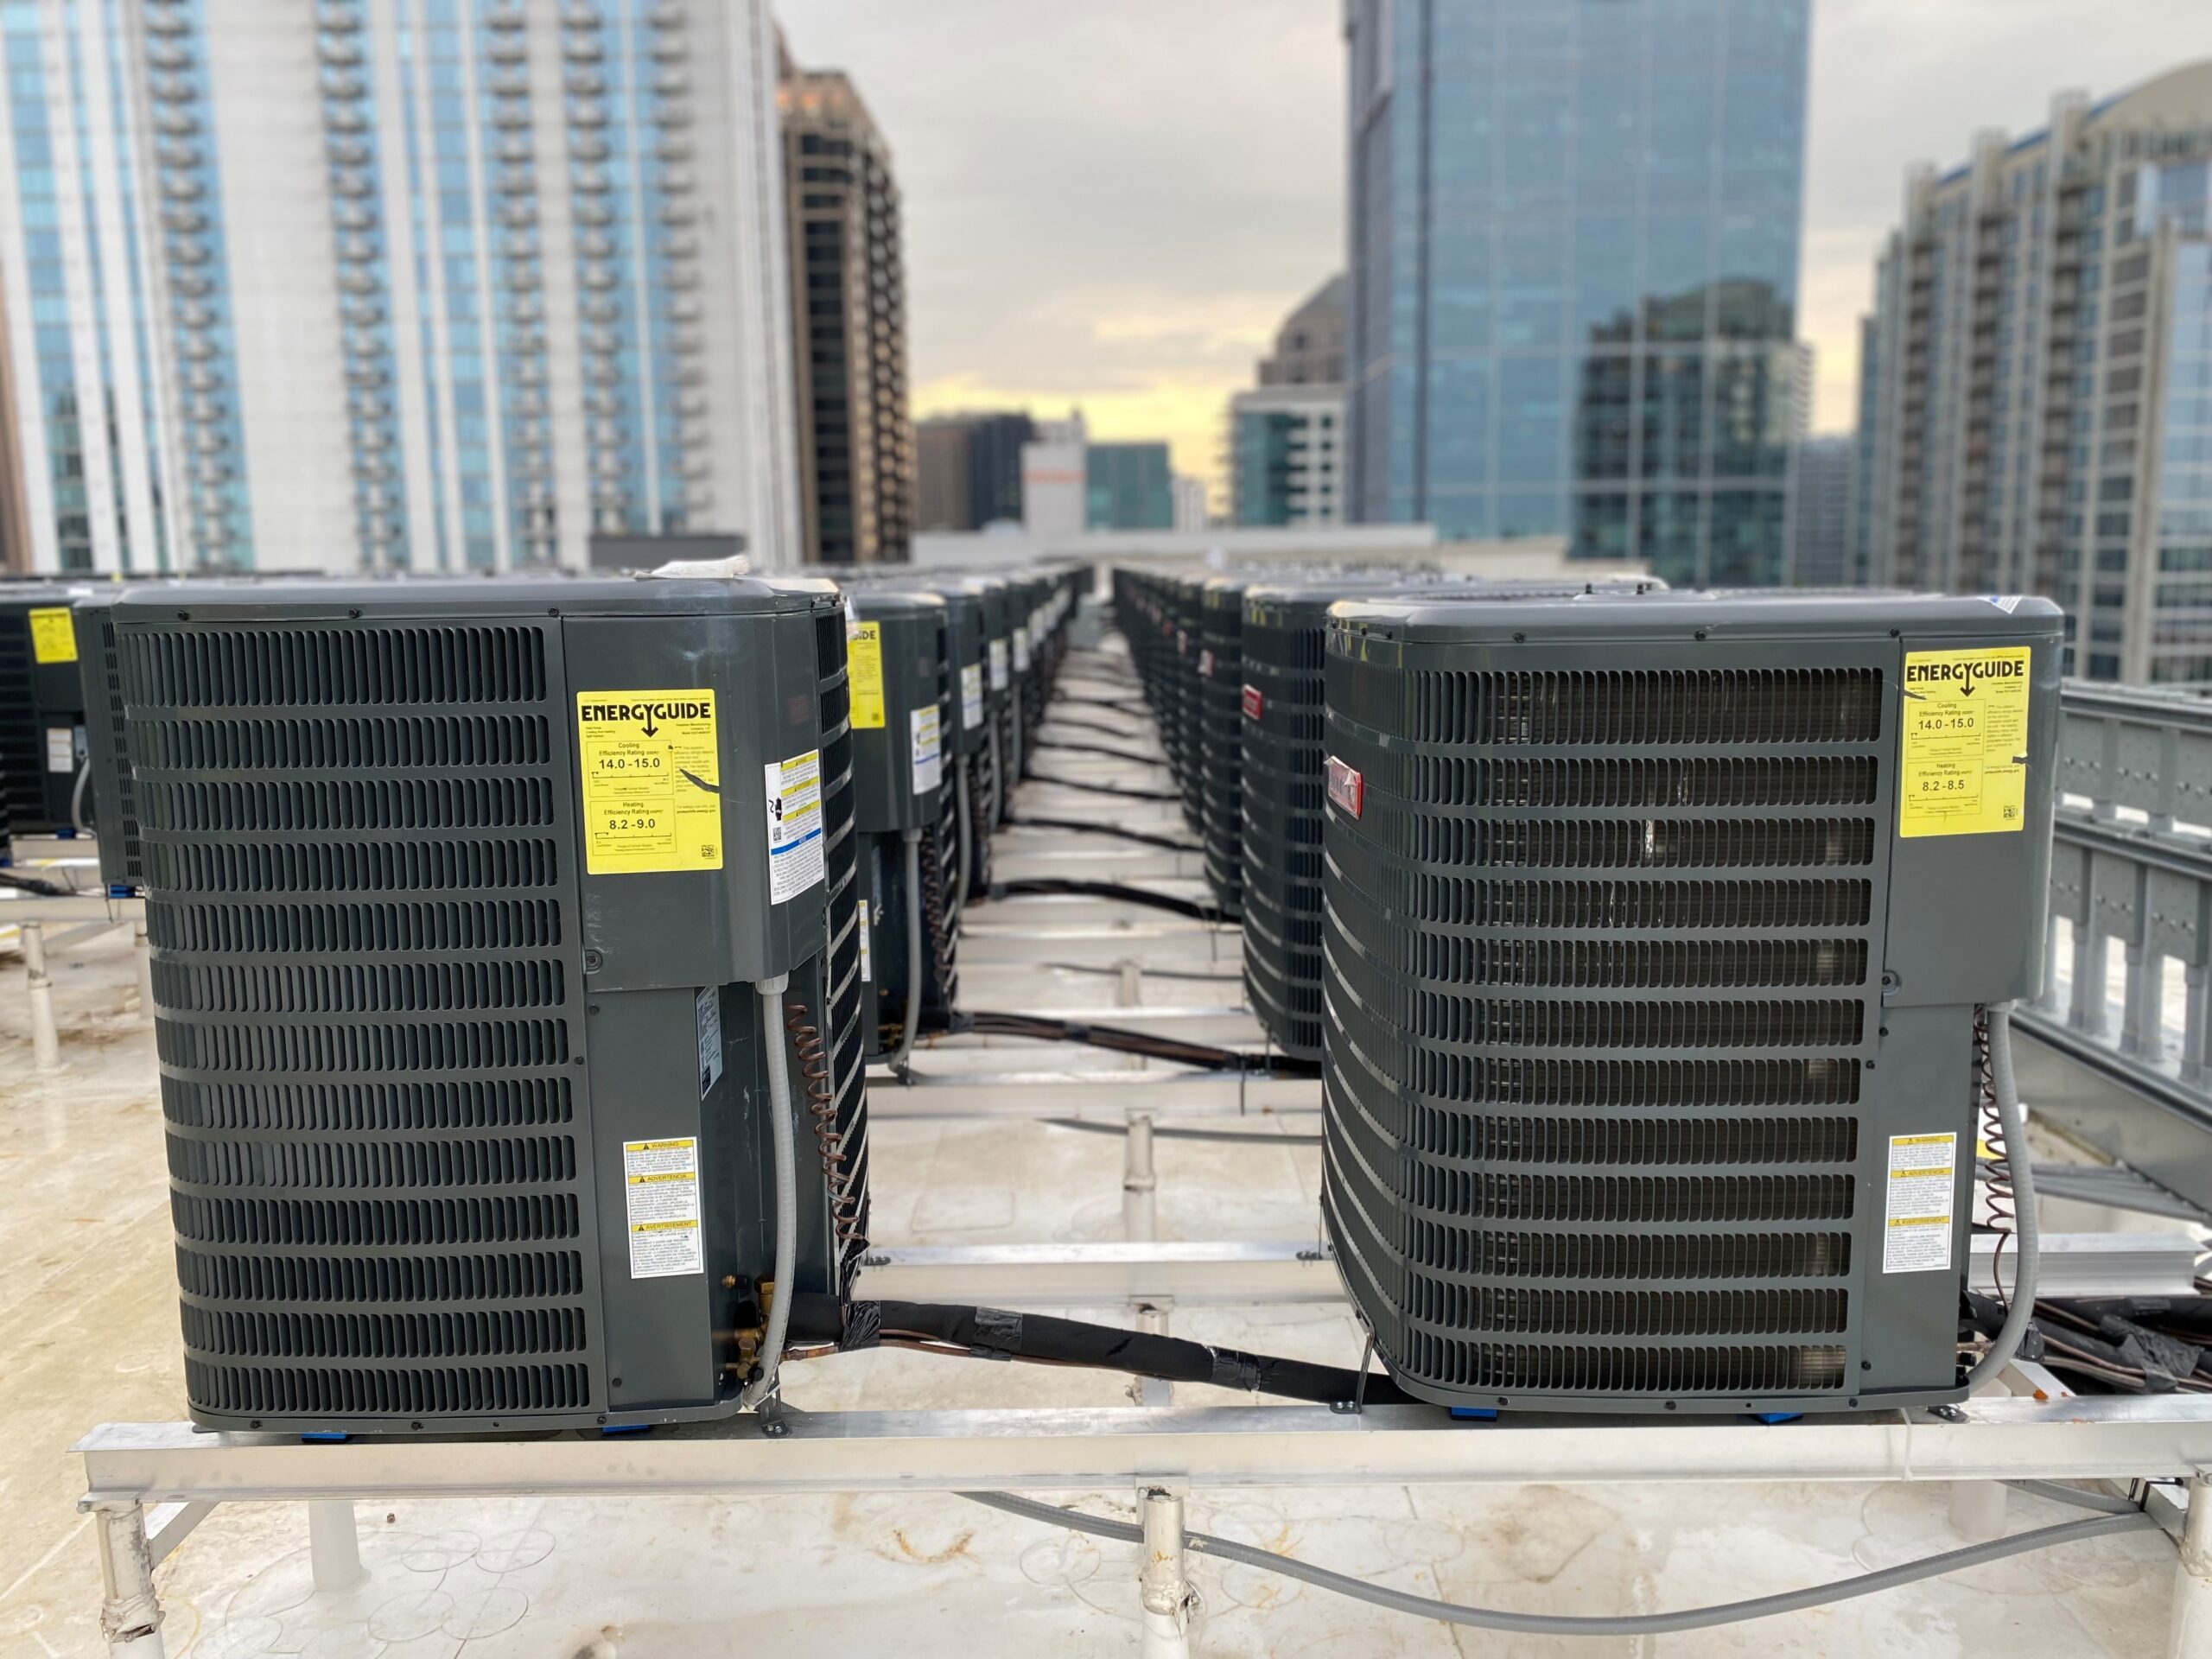 HVAC units on rooftop